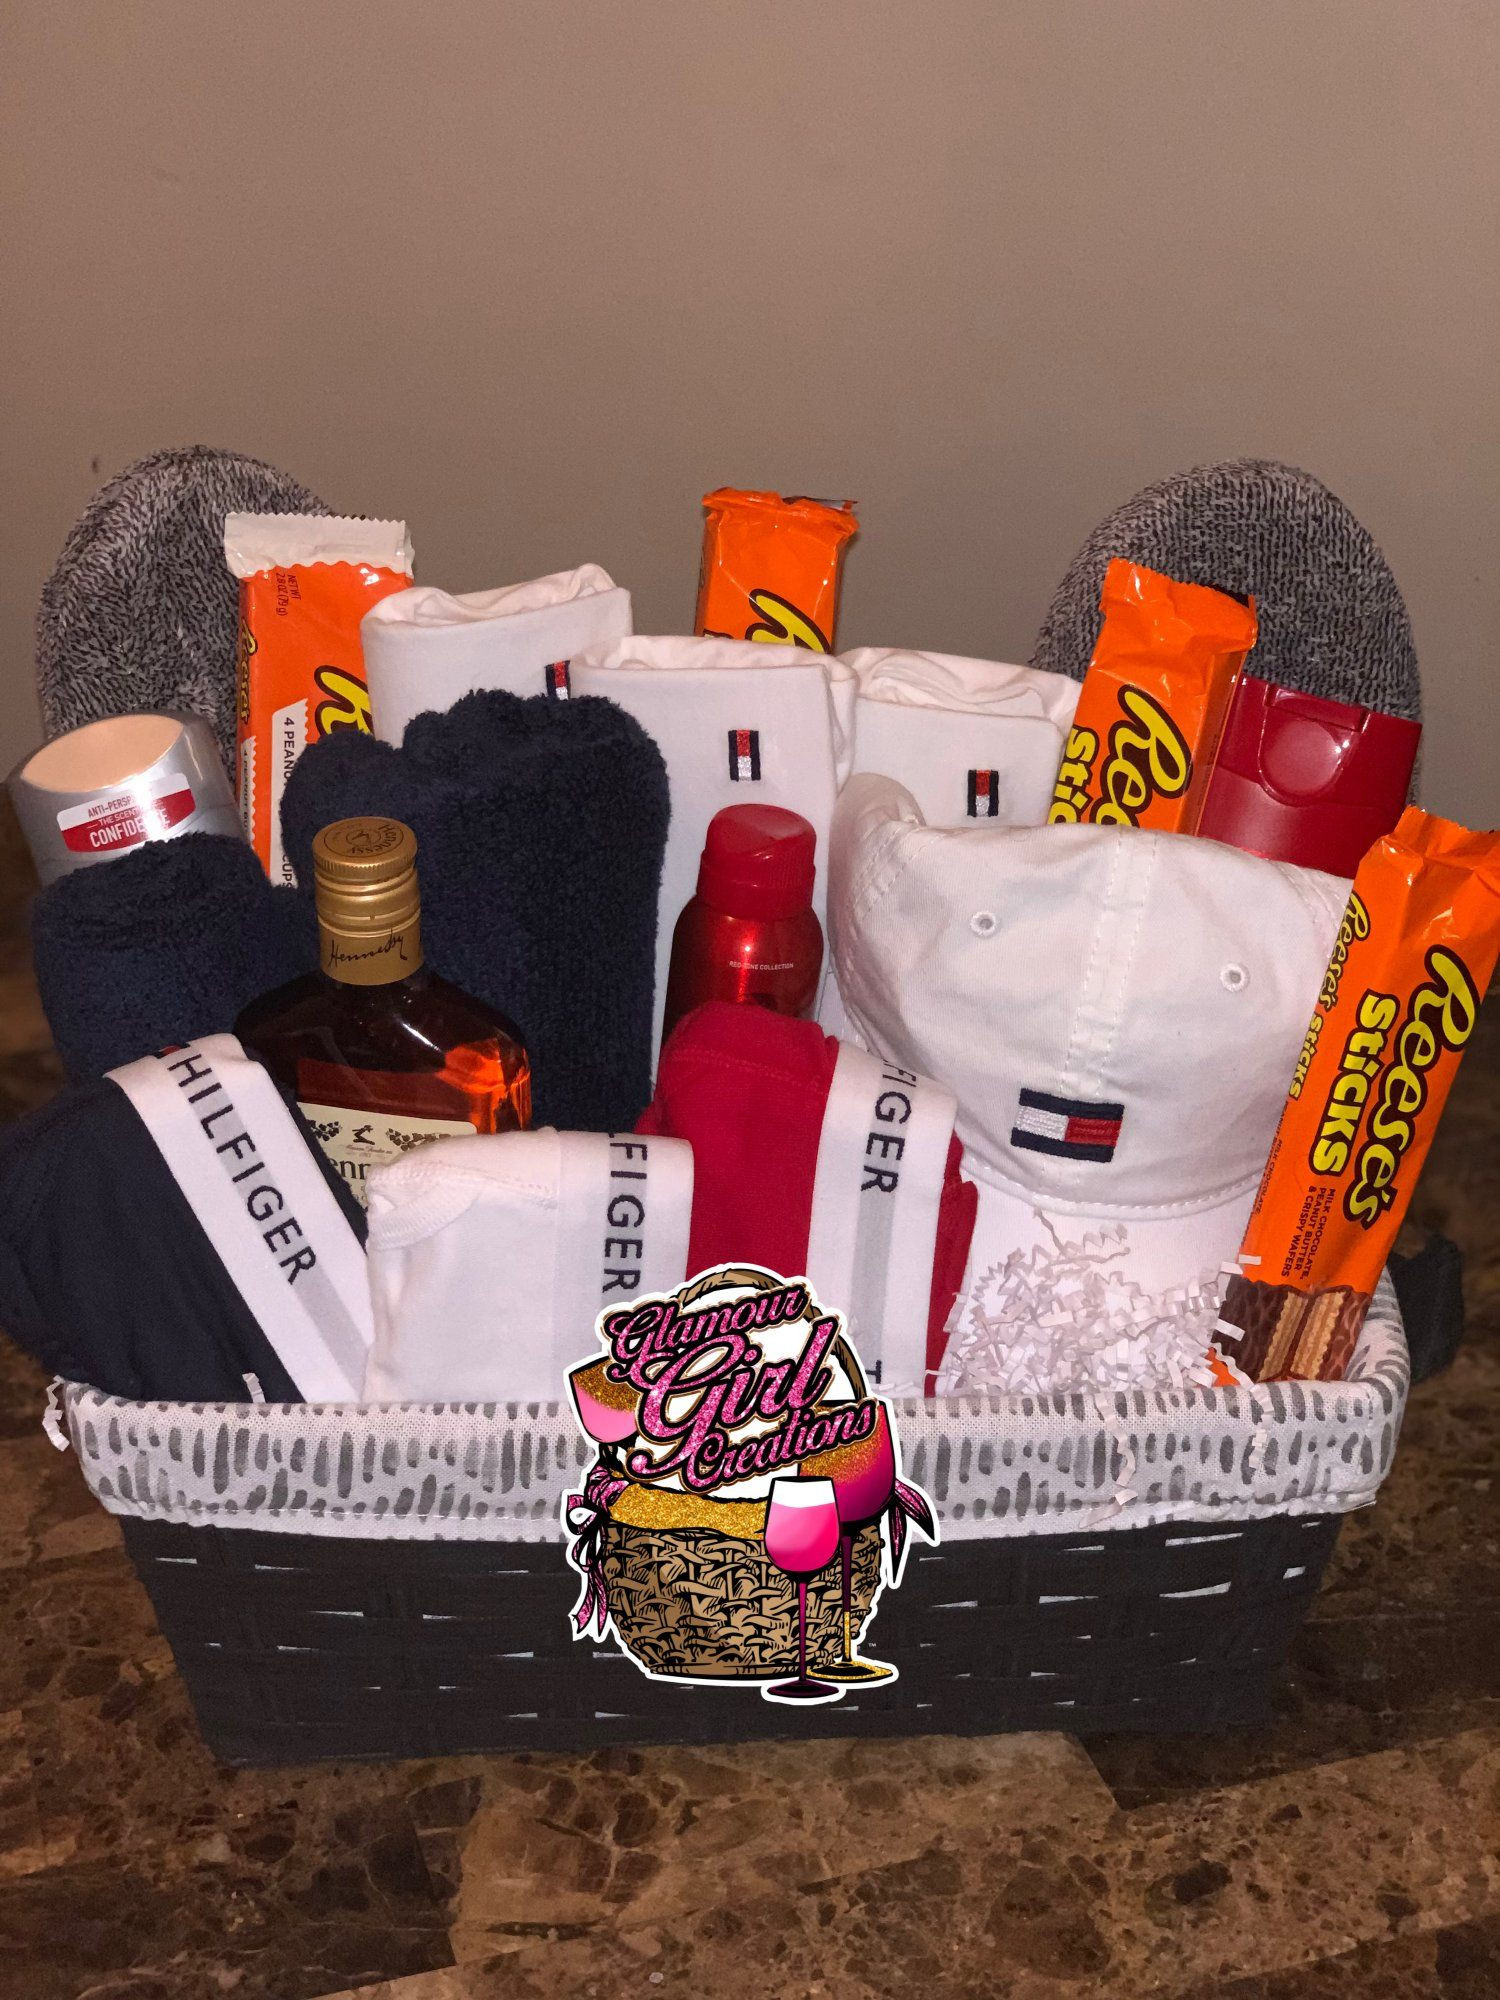 Cute Gift Basket Ideas For Boyfriend
 Image of Small Tommy Hilfiger basket